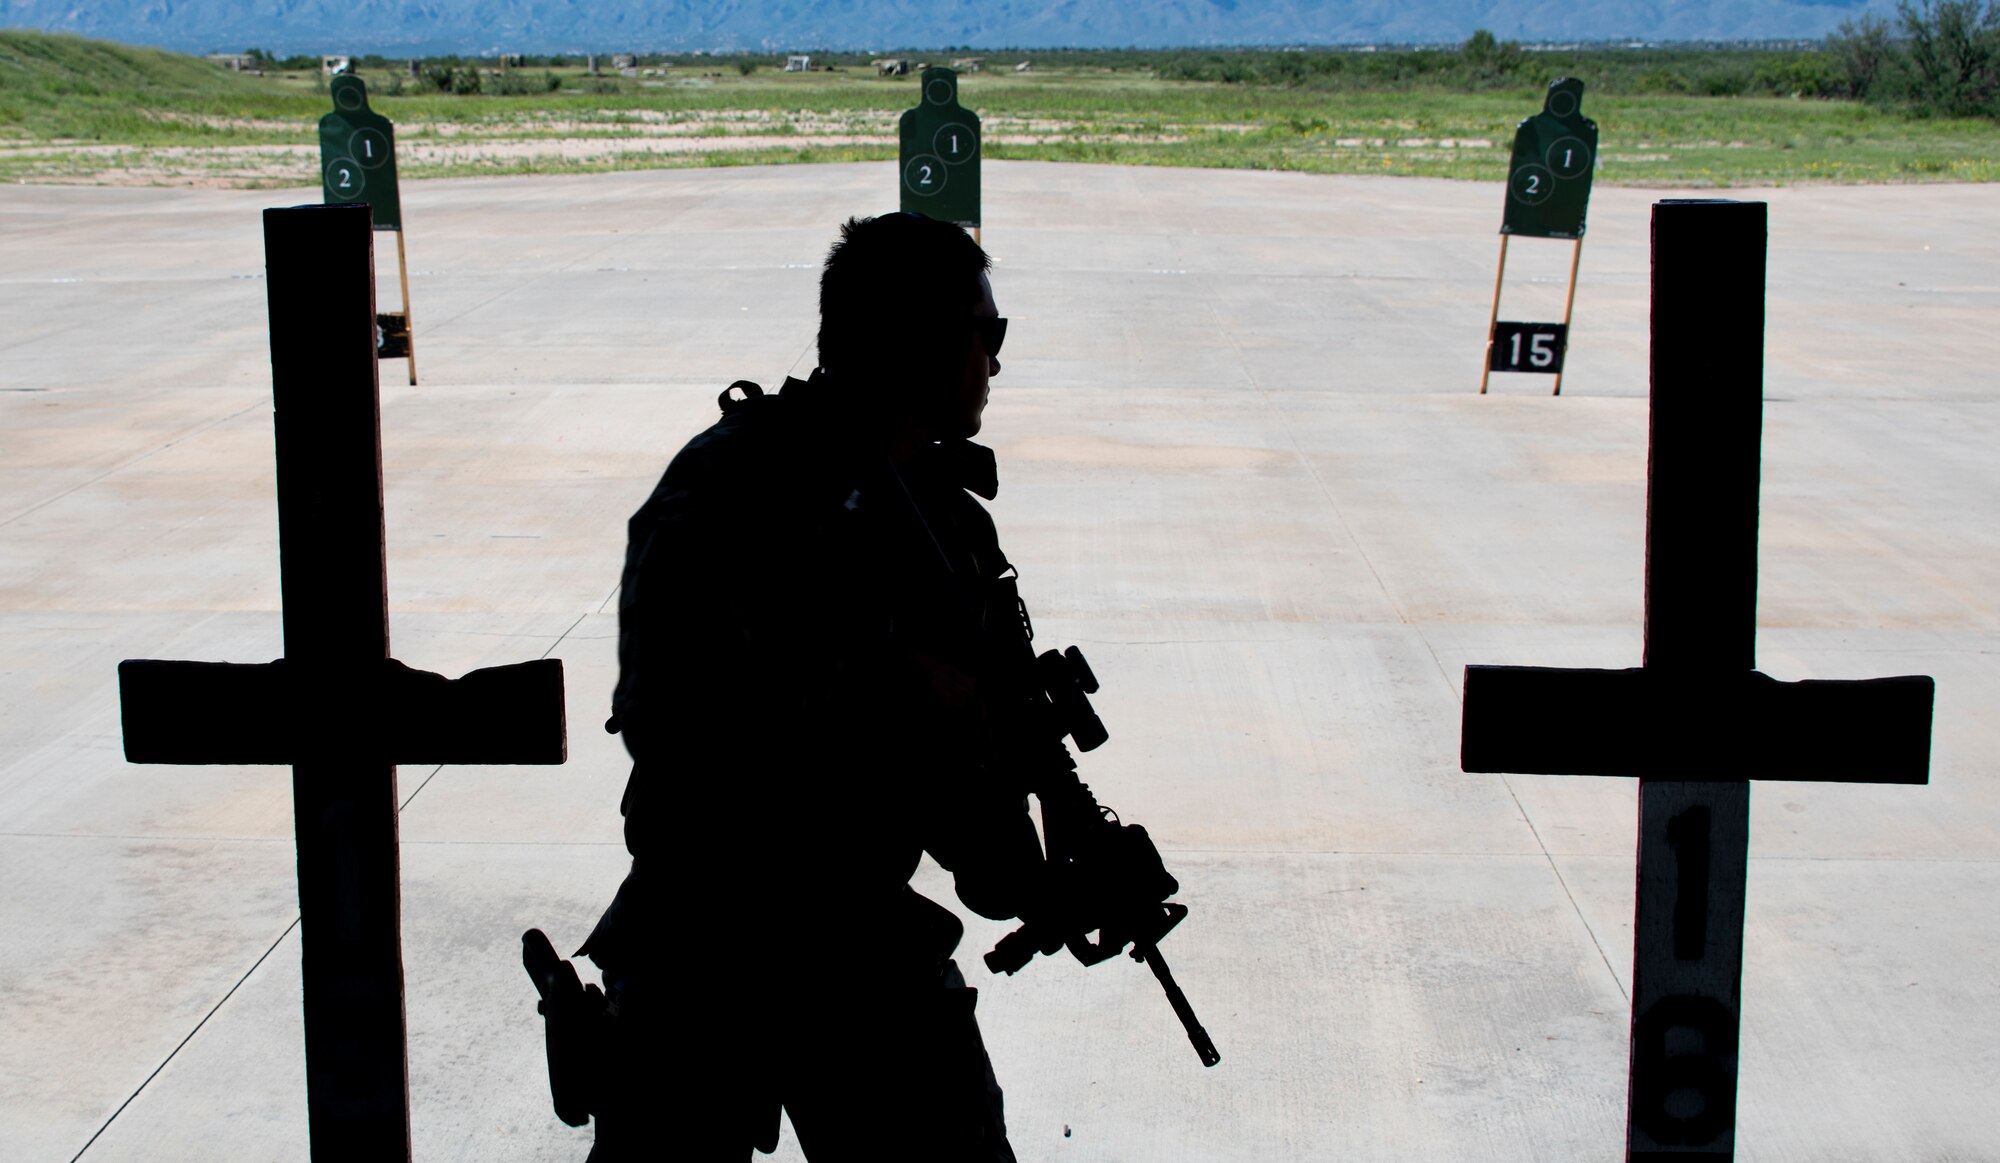 A photo of an airman holding a rifle